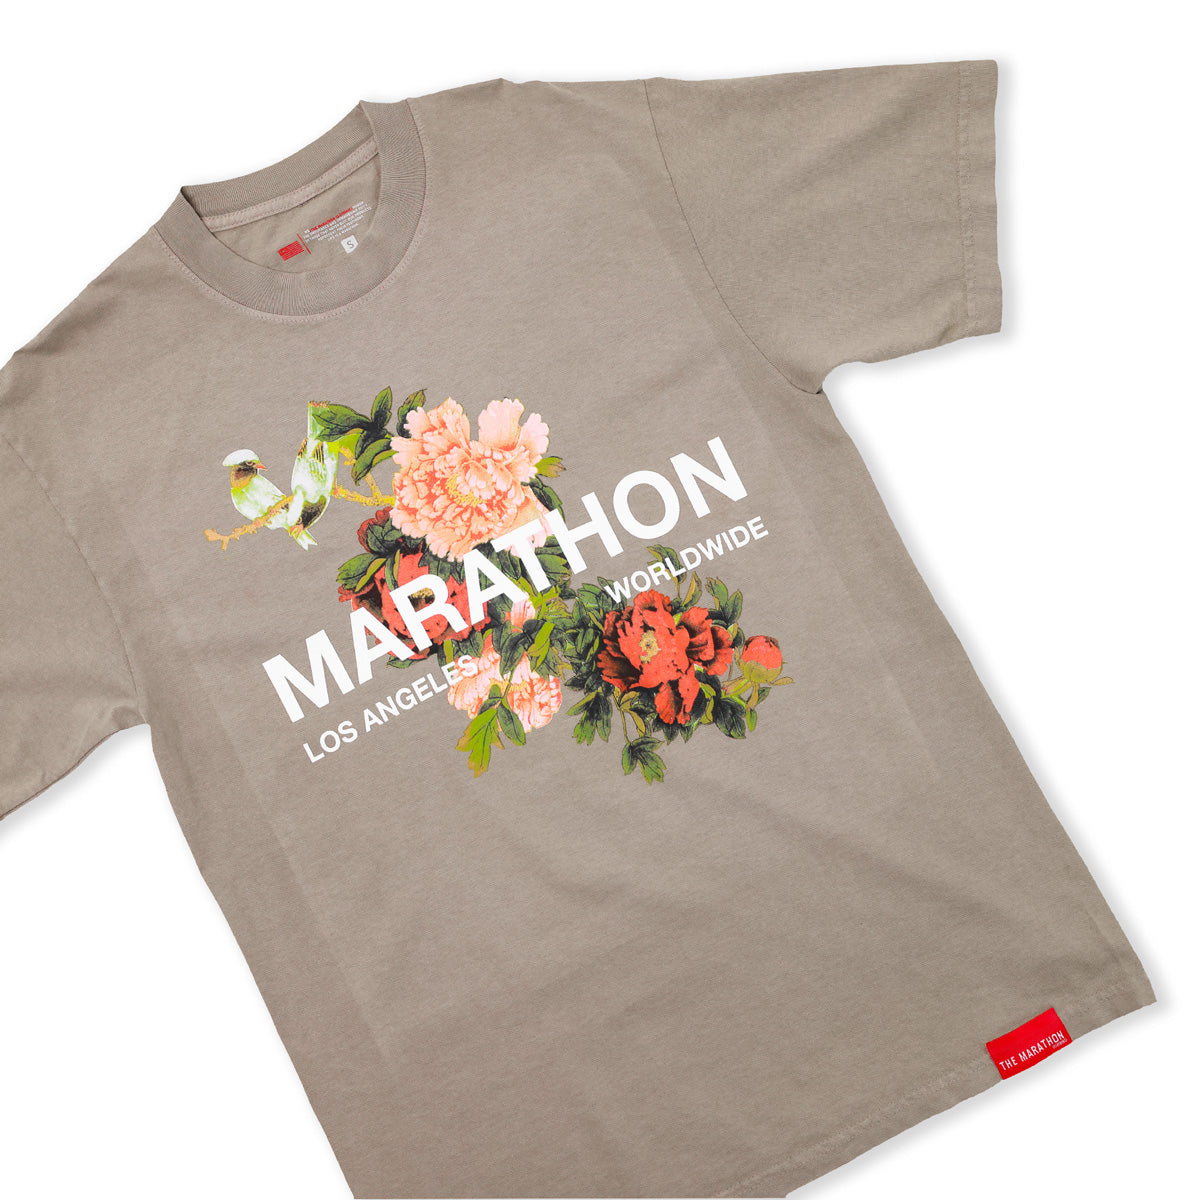  Marathon Global T-Shirt - Mocha - Front - Detail